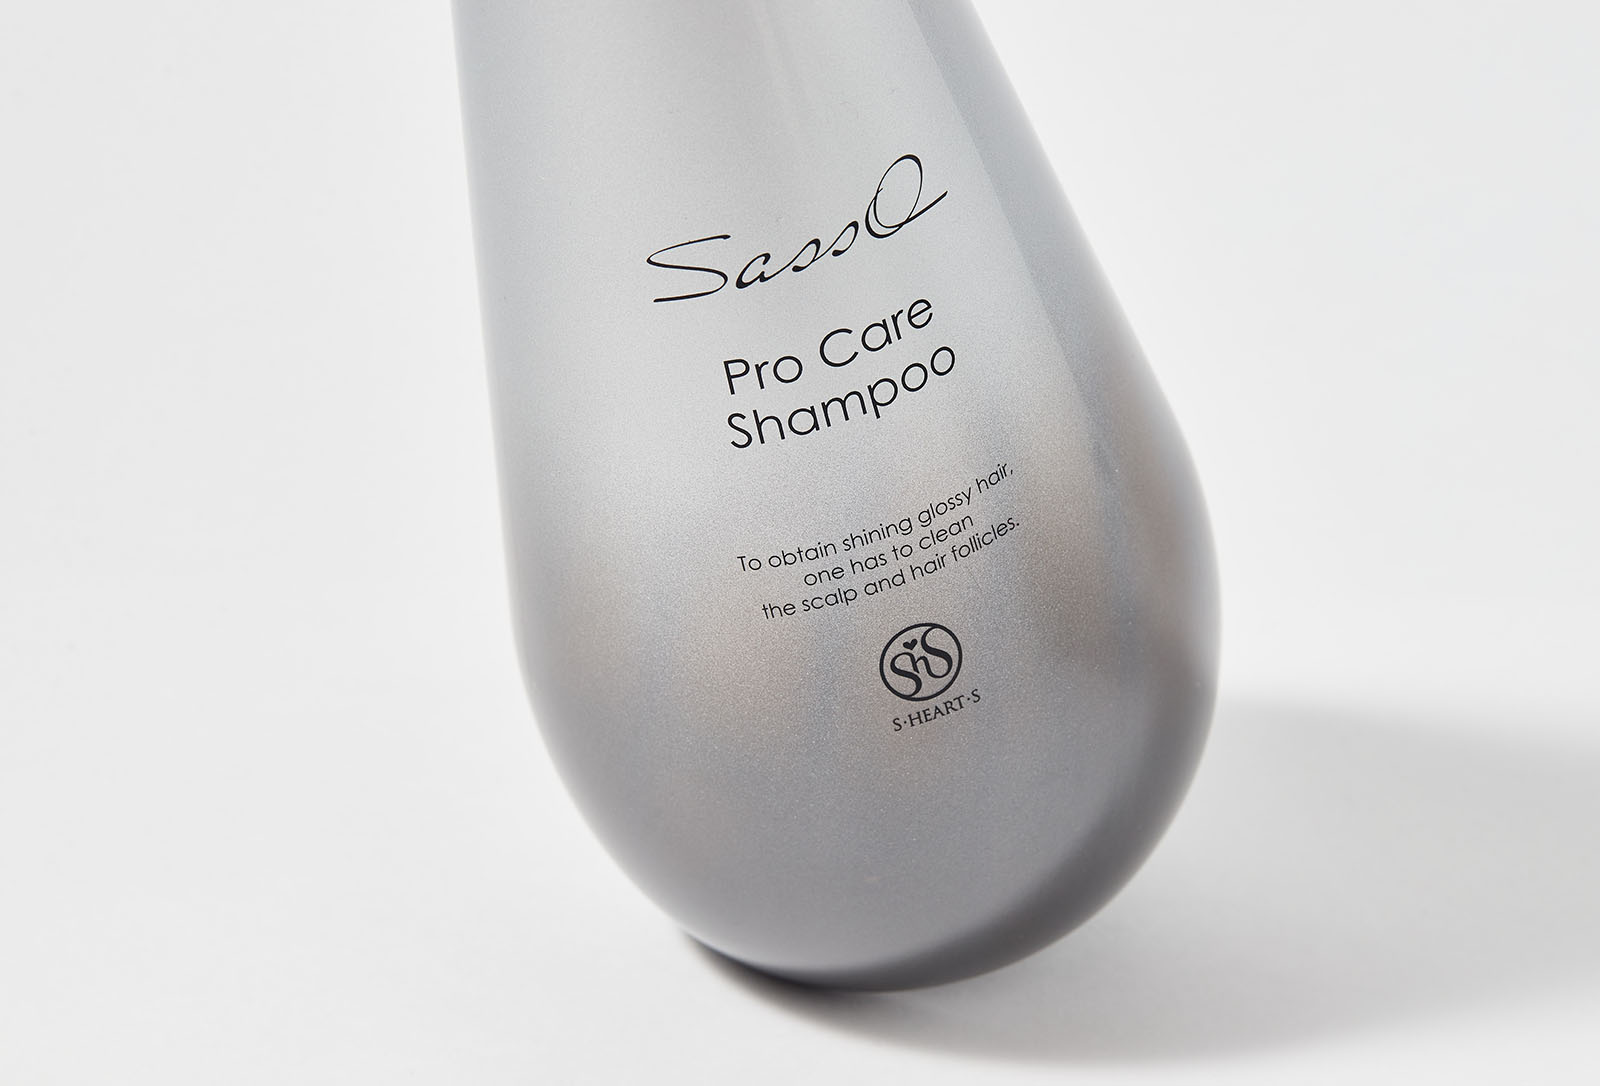 Шампунь, не содержащий силикон S-HEART-S Sasso Pro Care Shampoo